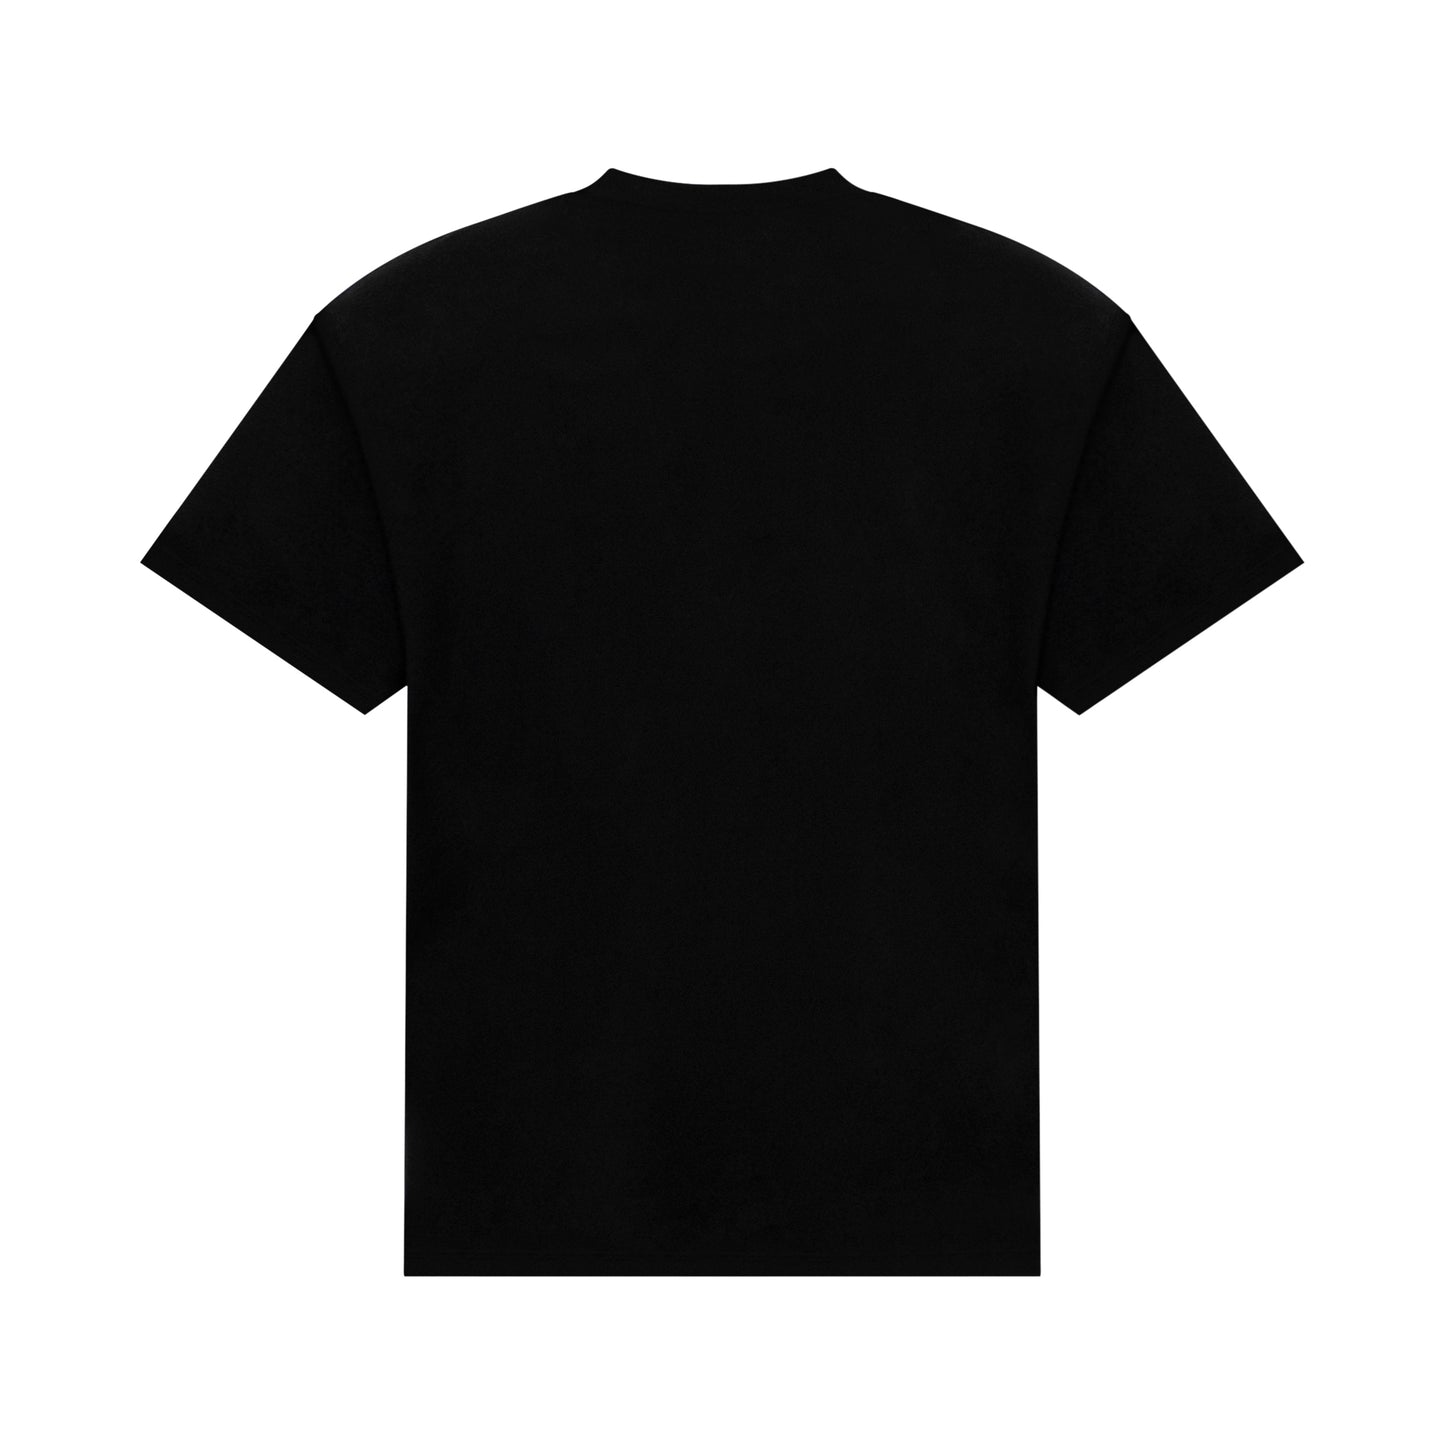 Metallic Bunny T-Shirt in Black